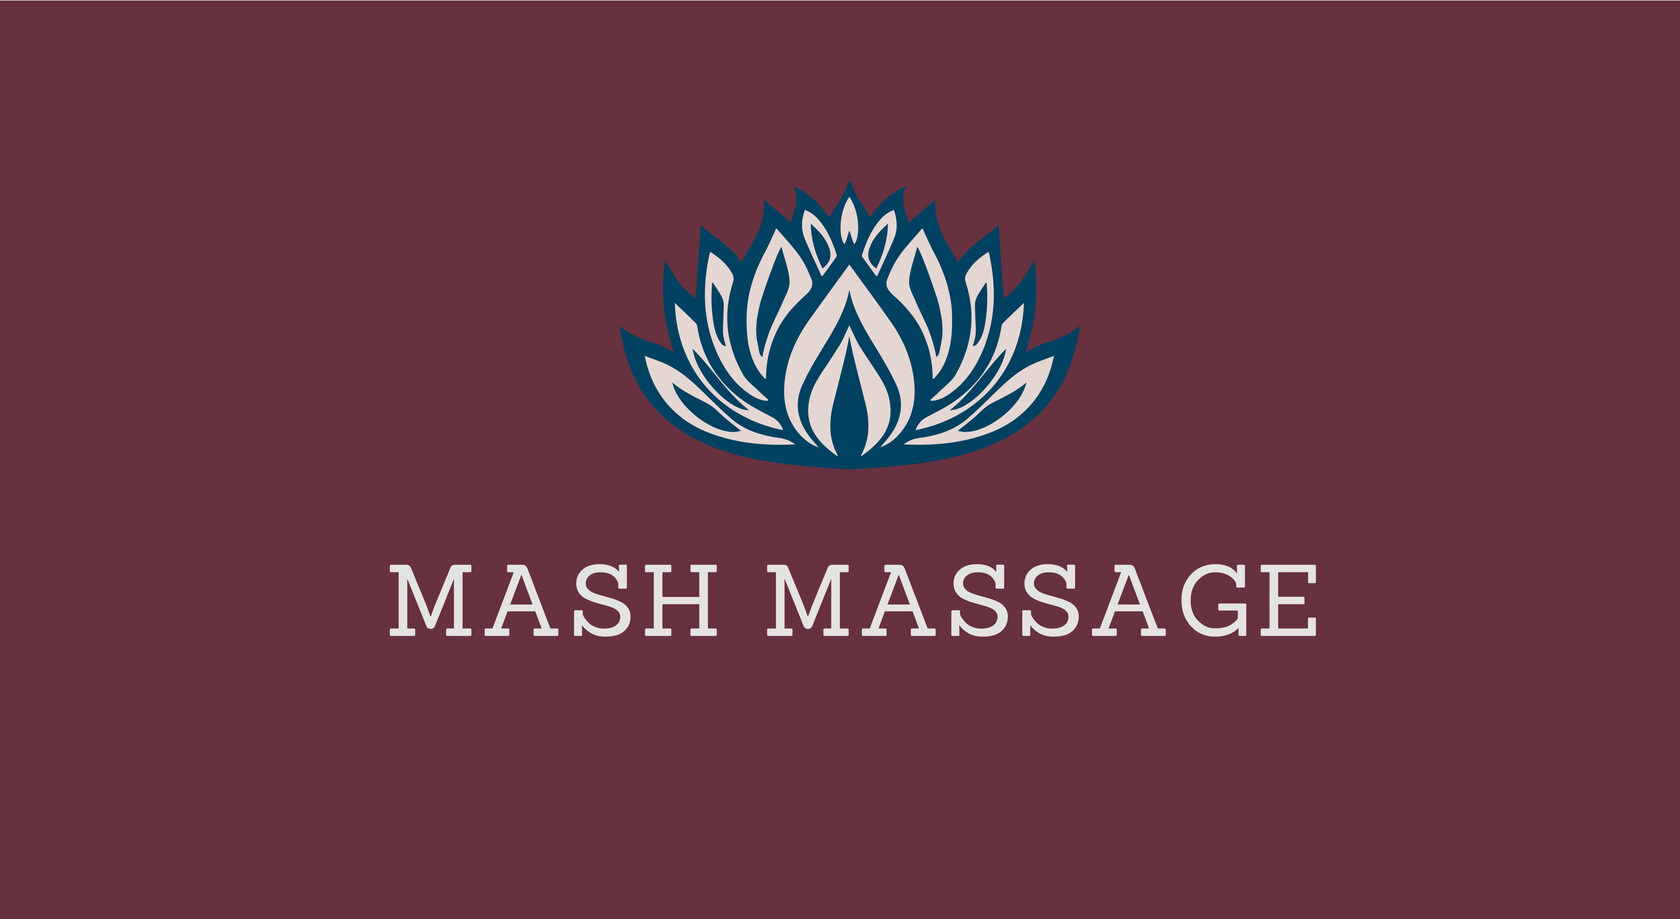 Flado massage spb. Oper mash